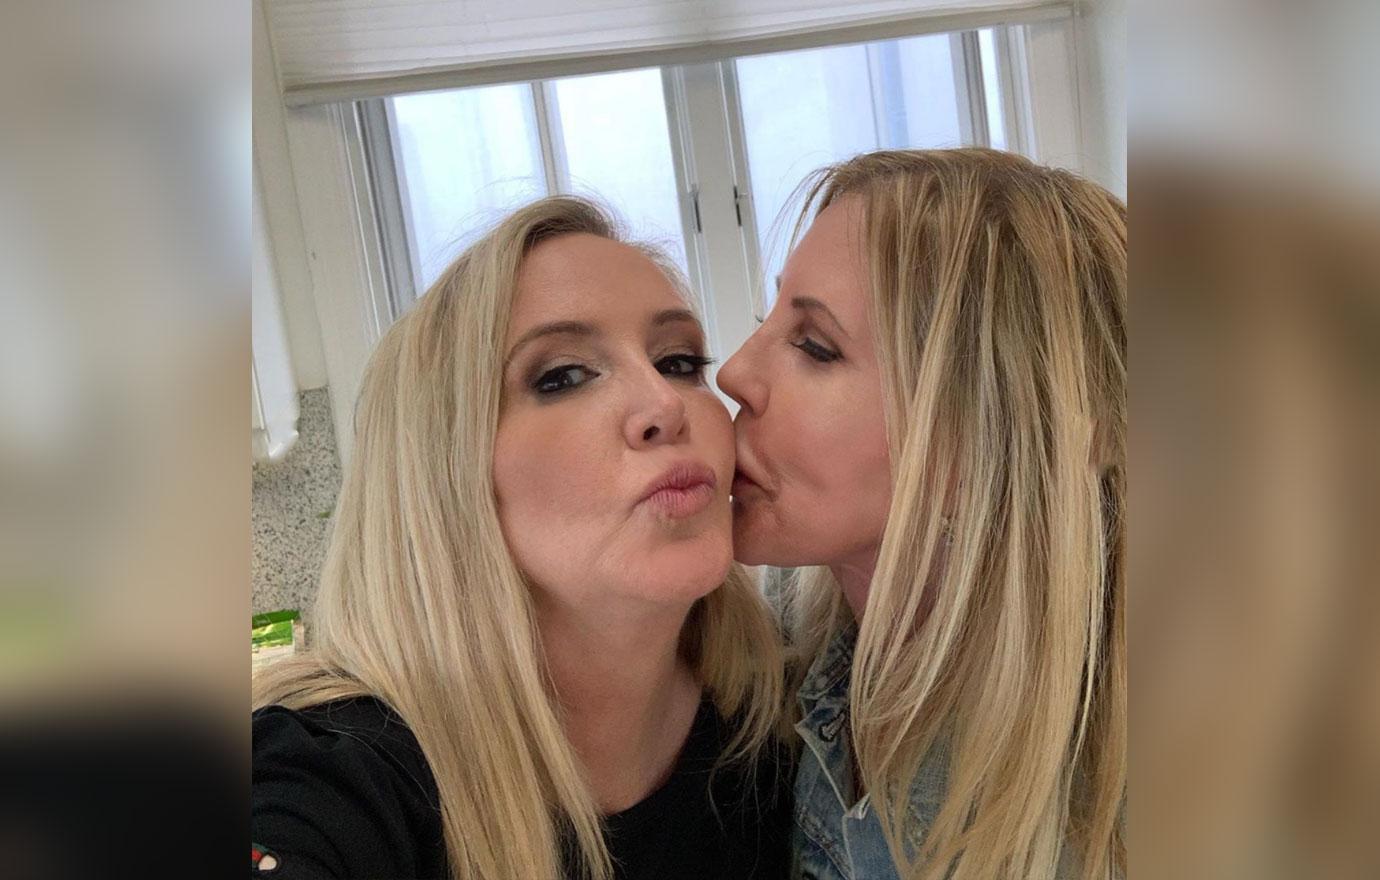 Shannon twins kiss